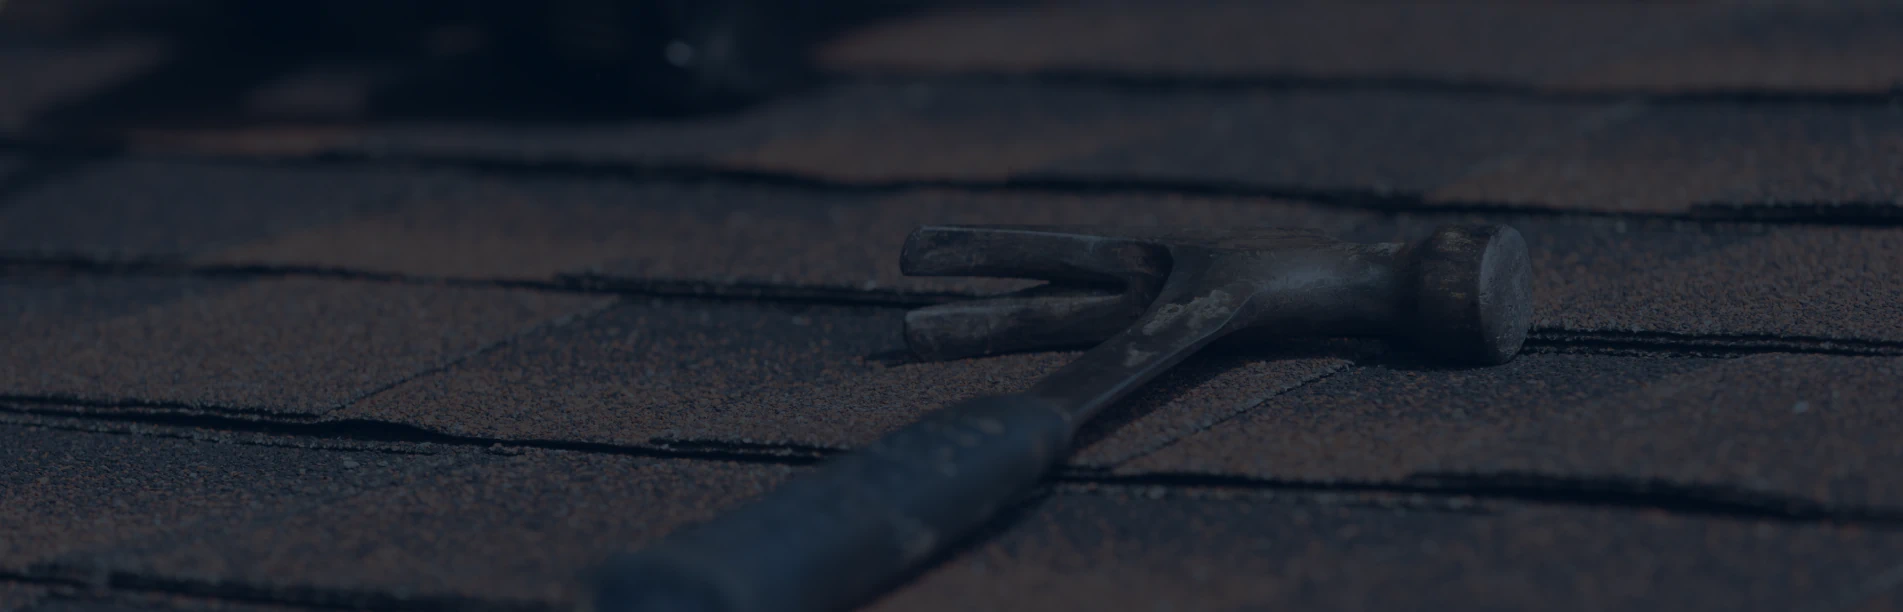 roof repair tools on asphalt shingles